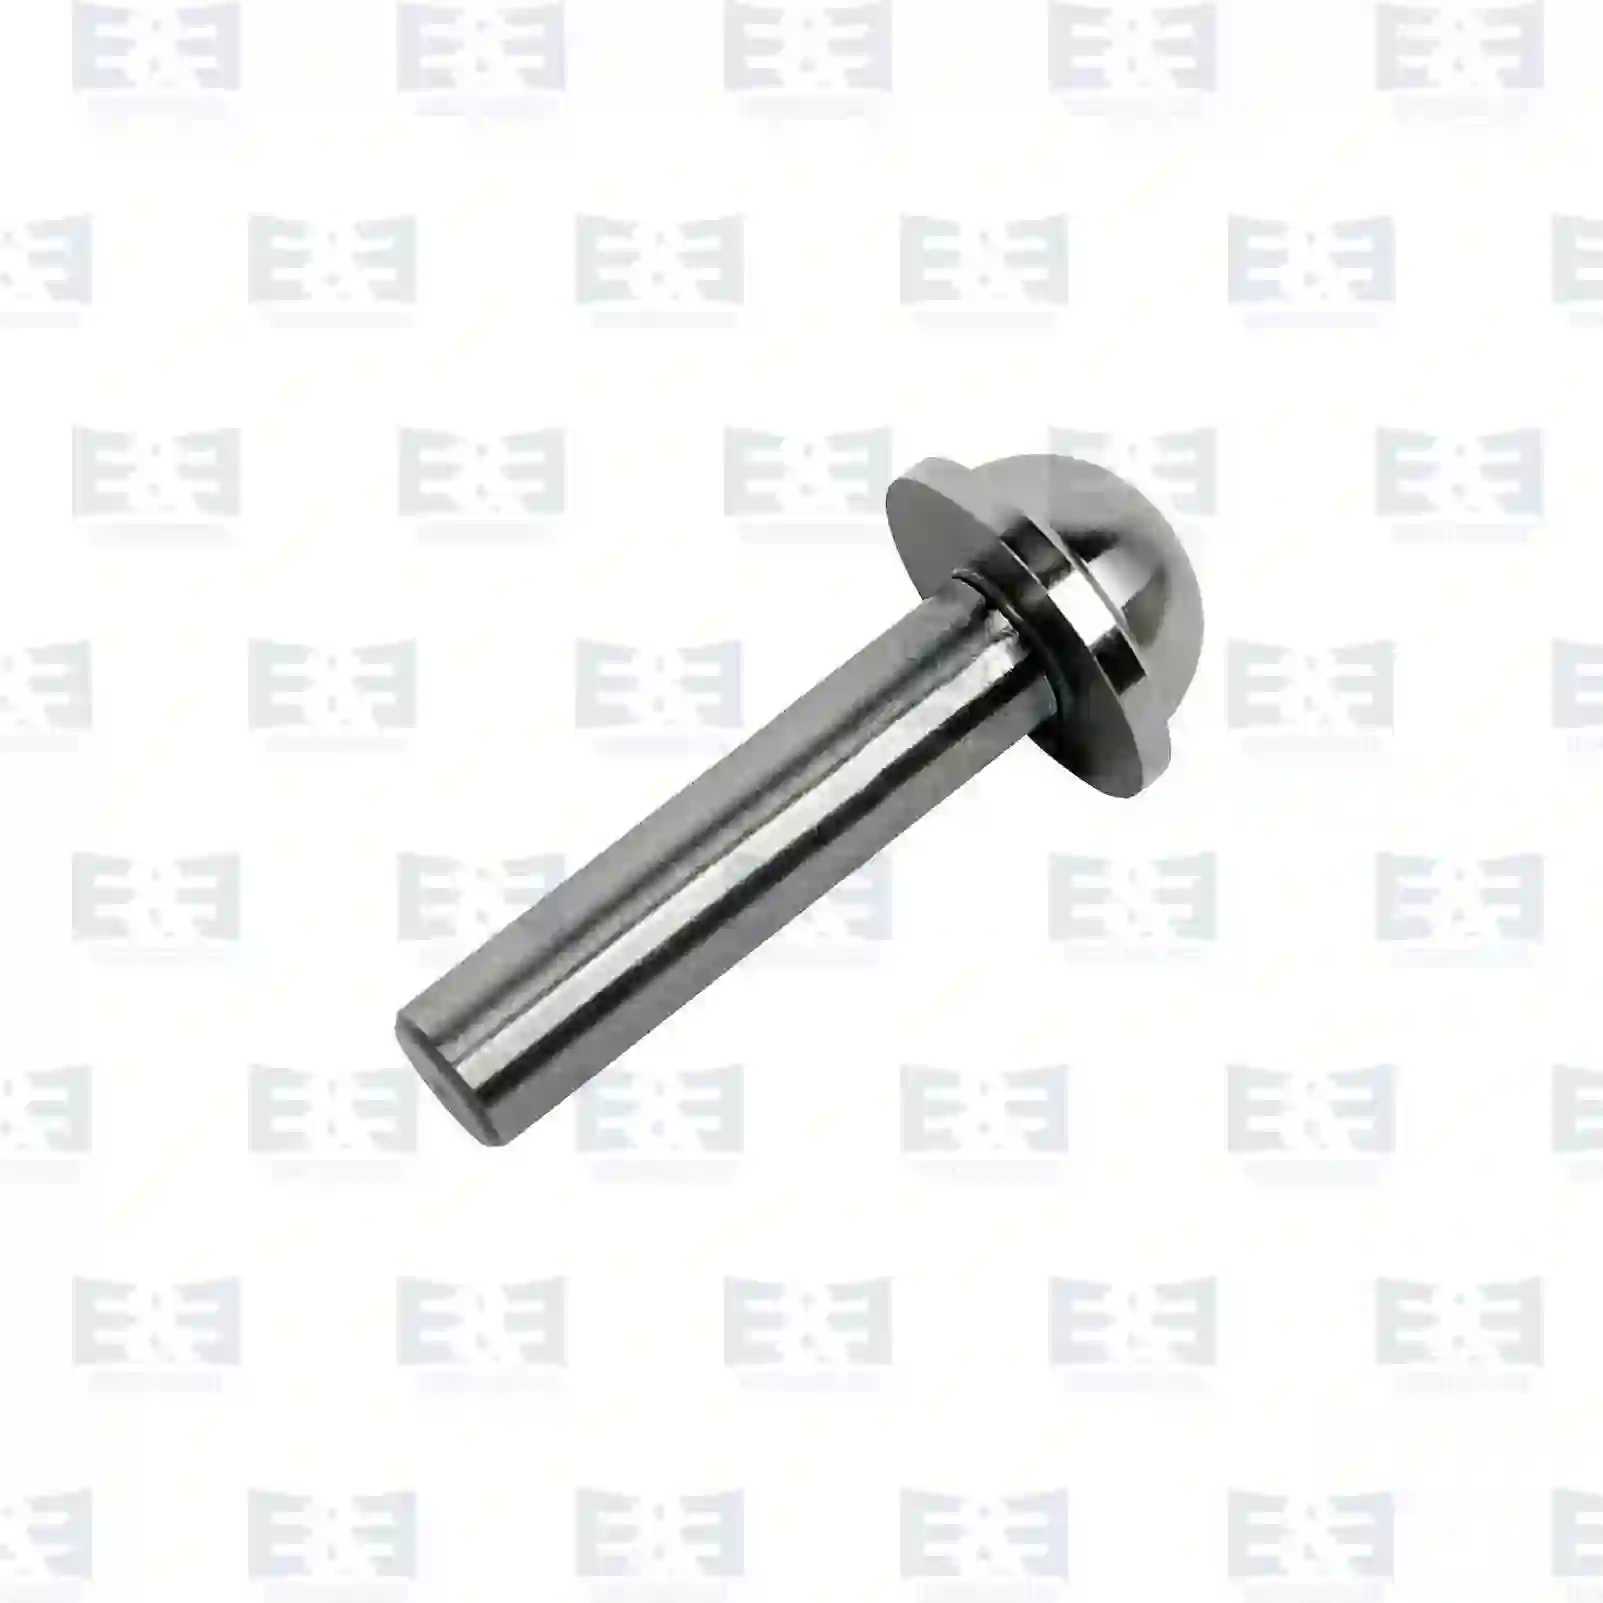  Reducing valve || E&E Truck Spare Parts | Truck Spare Parts, Auotomotive Spare Parts